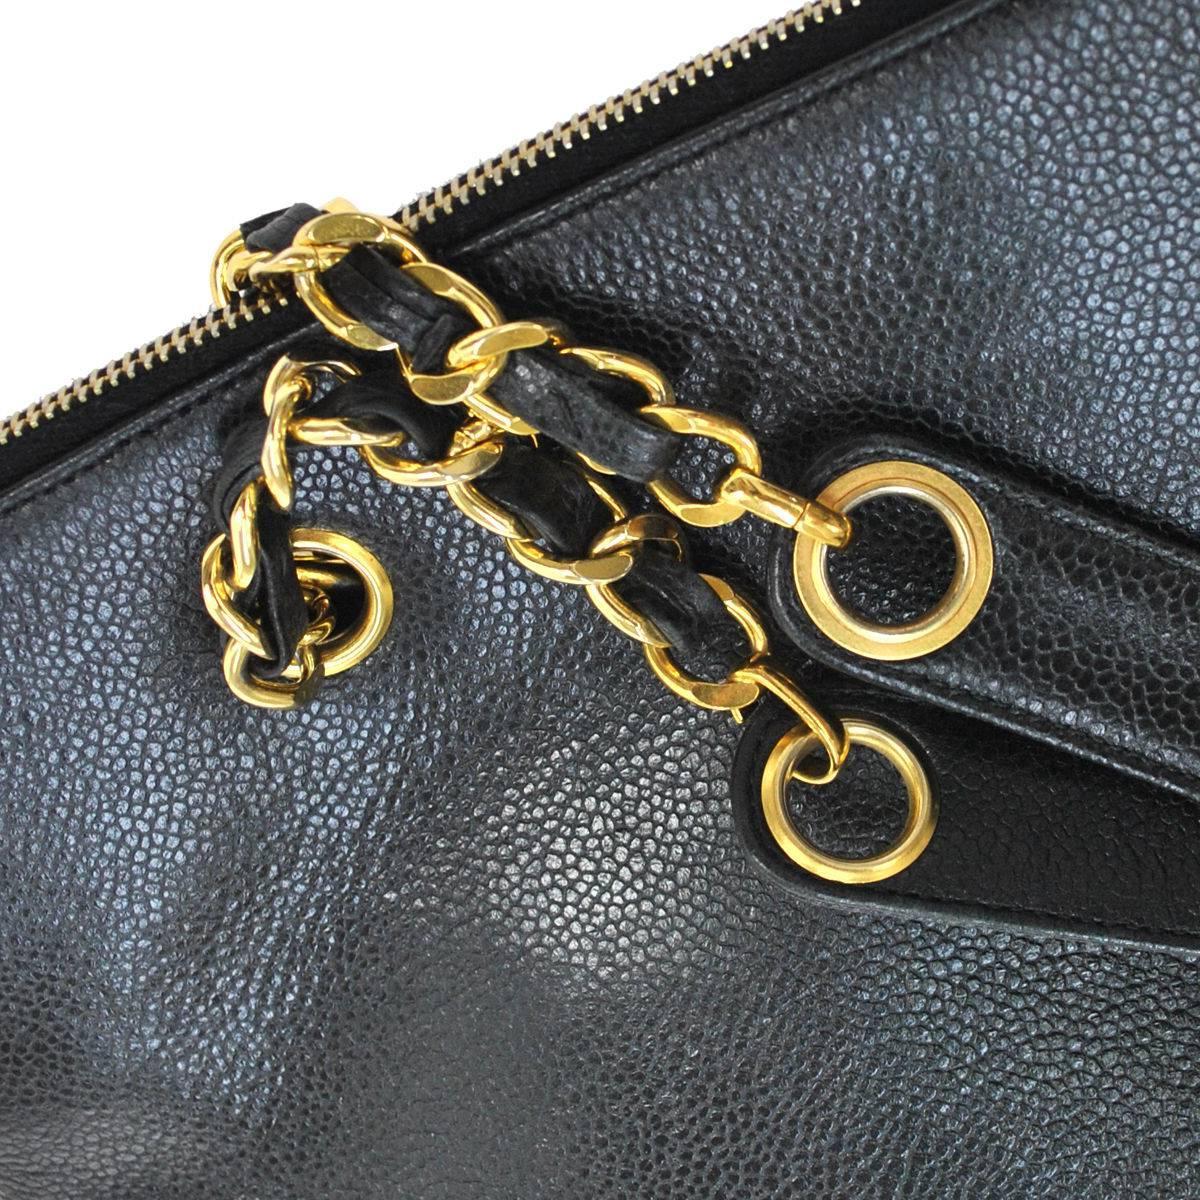 Women's Chanel Black Caviar Leather Carryall Shopper Weekender Travel Shoulder Tote Bag